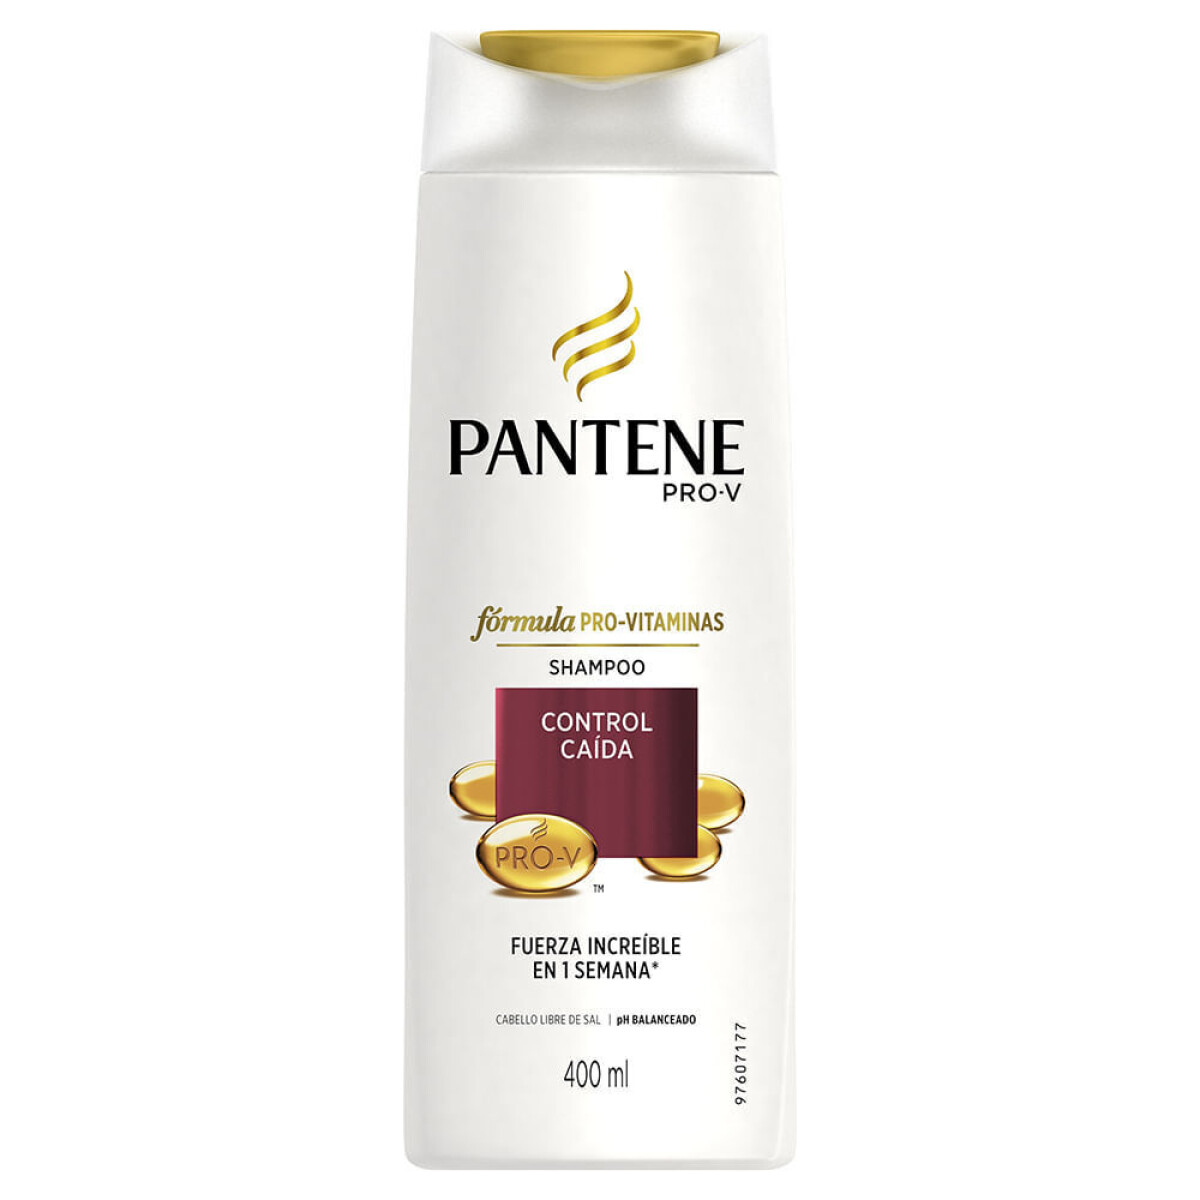 Pantene Shampoo Control Caida 400 ml 